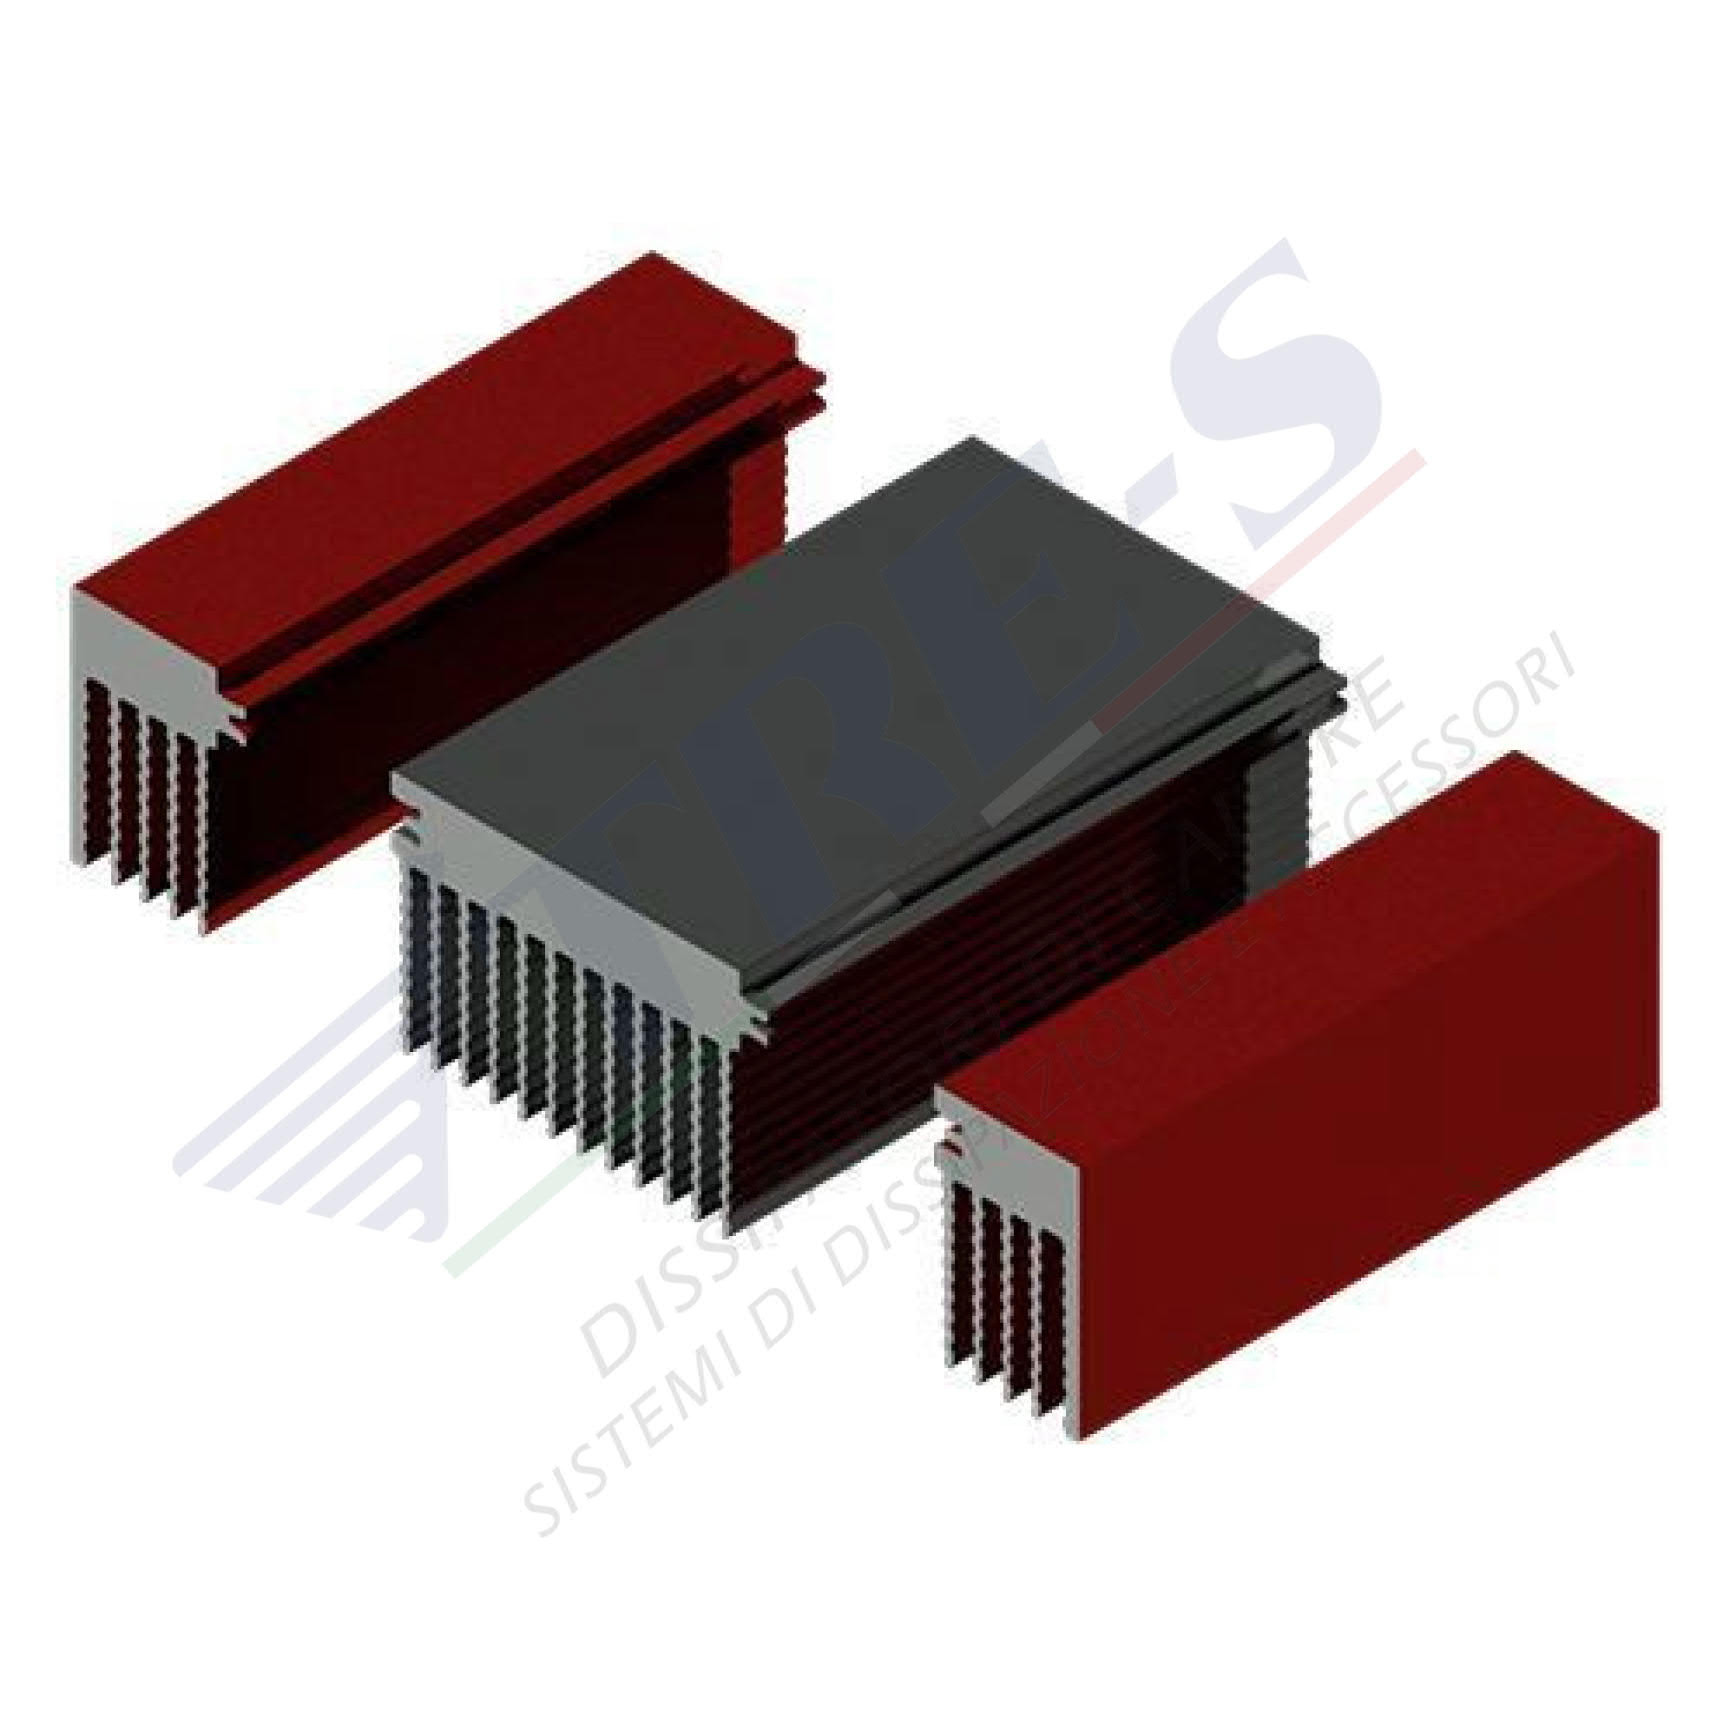 PRI1020 e PRI1021 - Embedded heat sinks